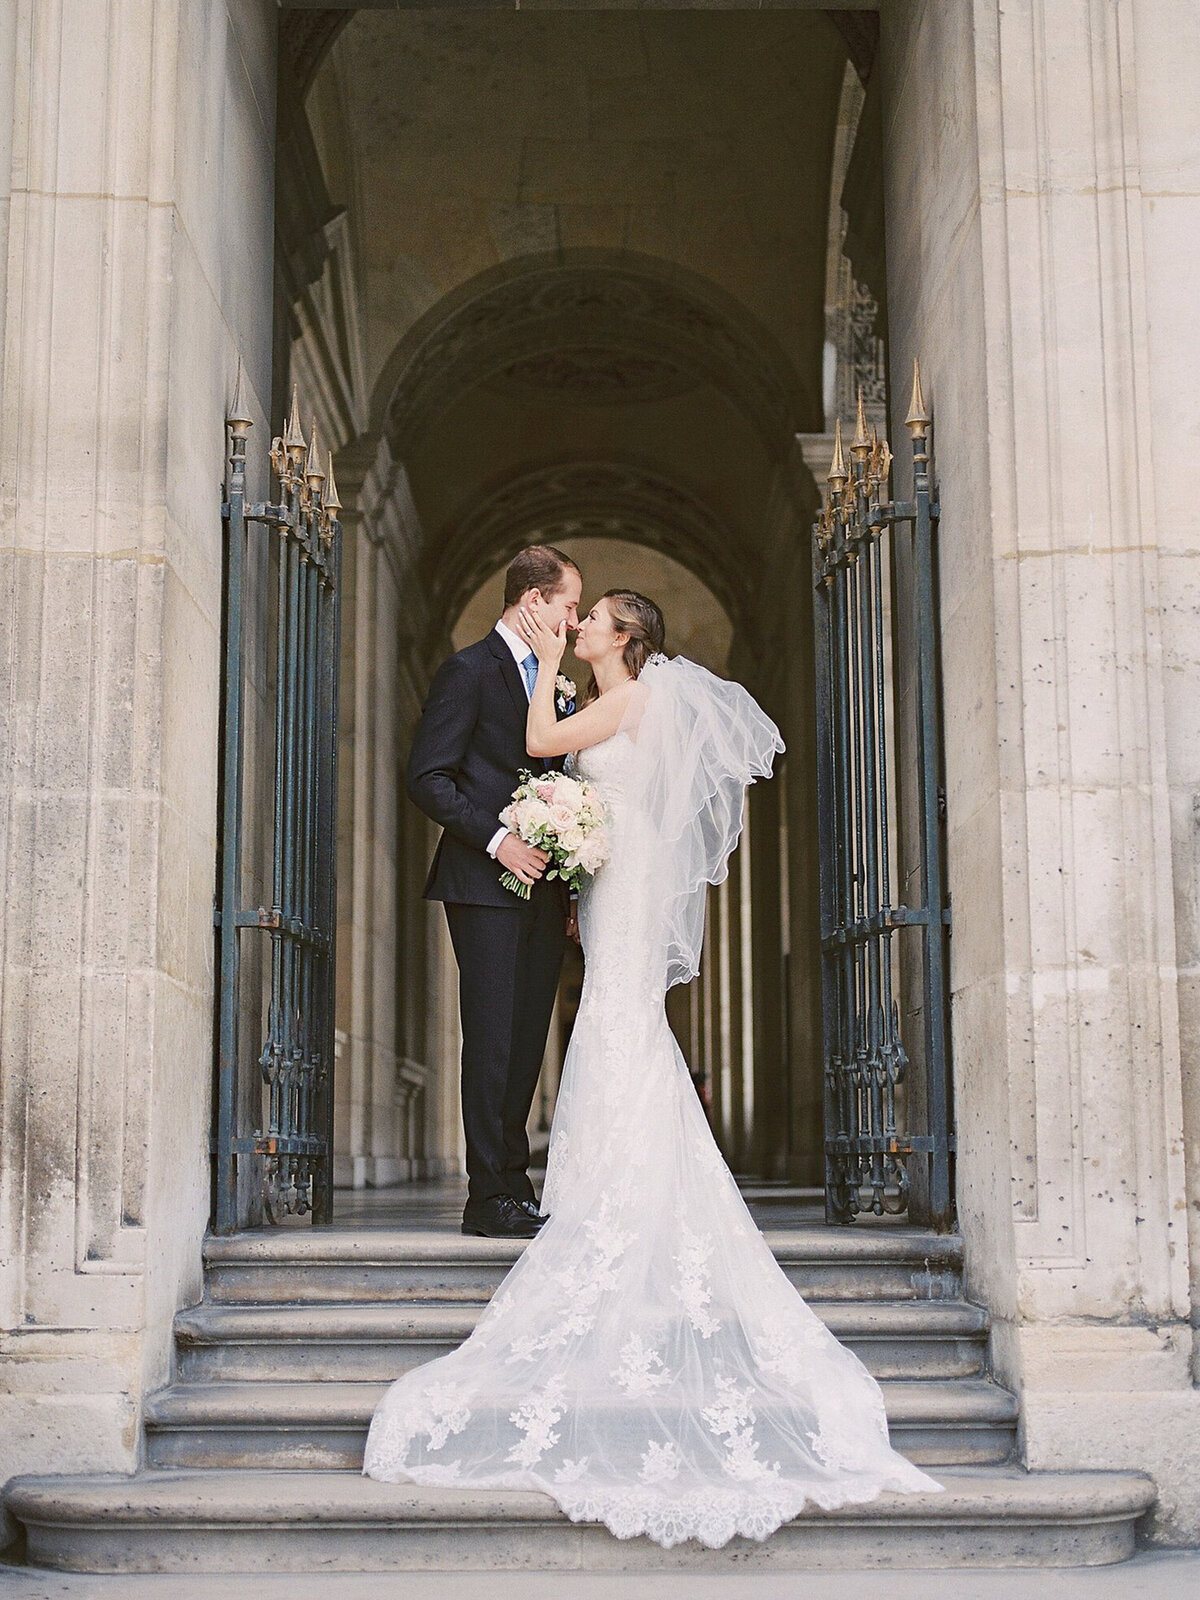 Boston-Wedding-Photographer-StephanieVegliante-7